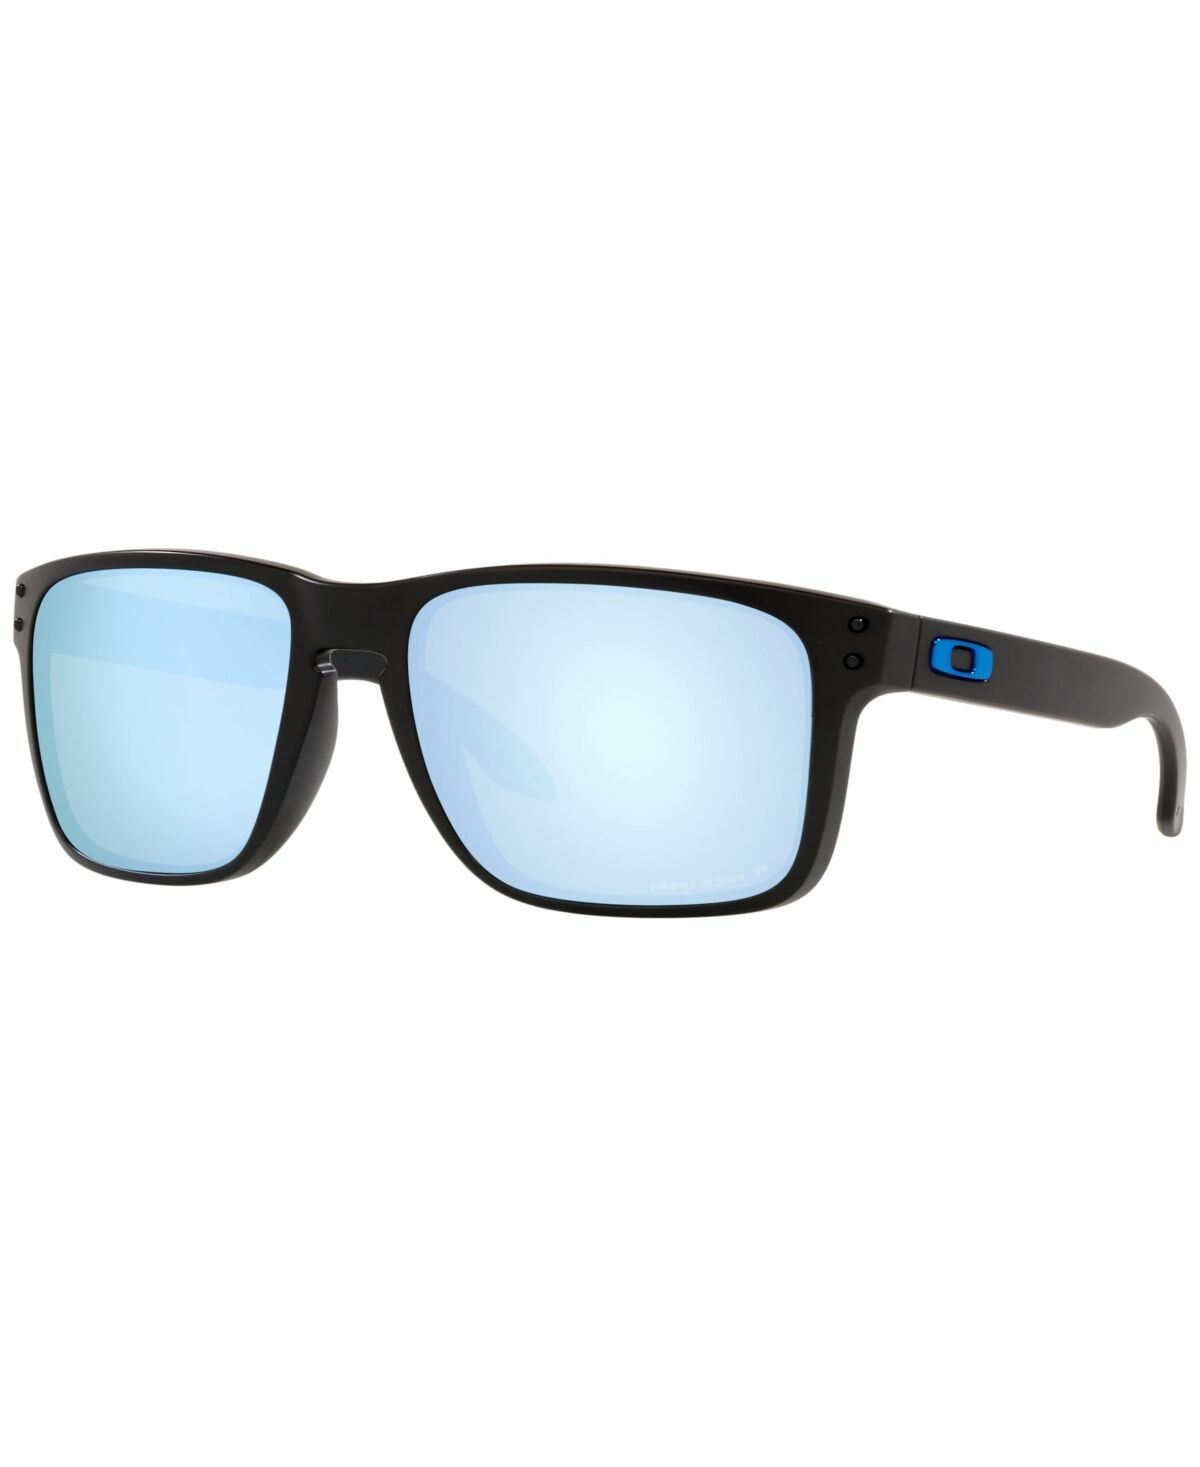 Oakley Men's Polarized Sunglasses, OO9417 Holbrook Xl - Matte Black